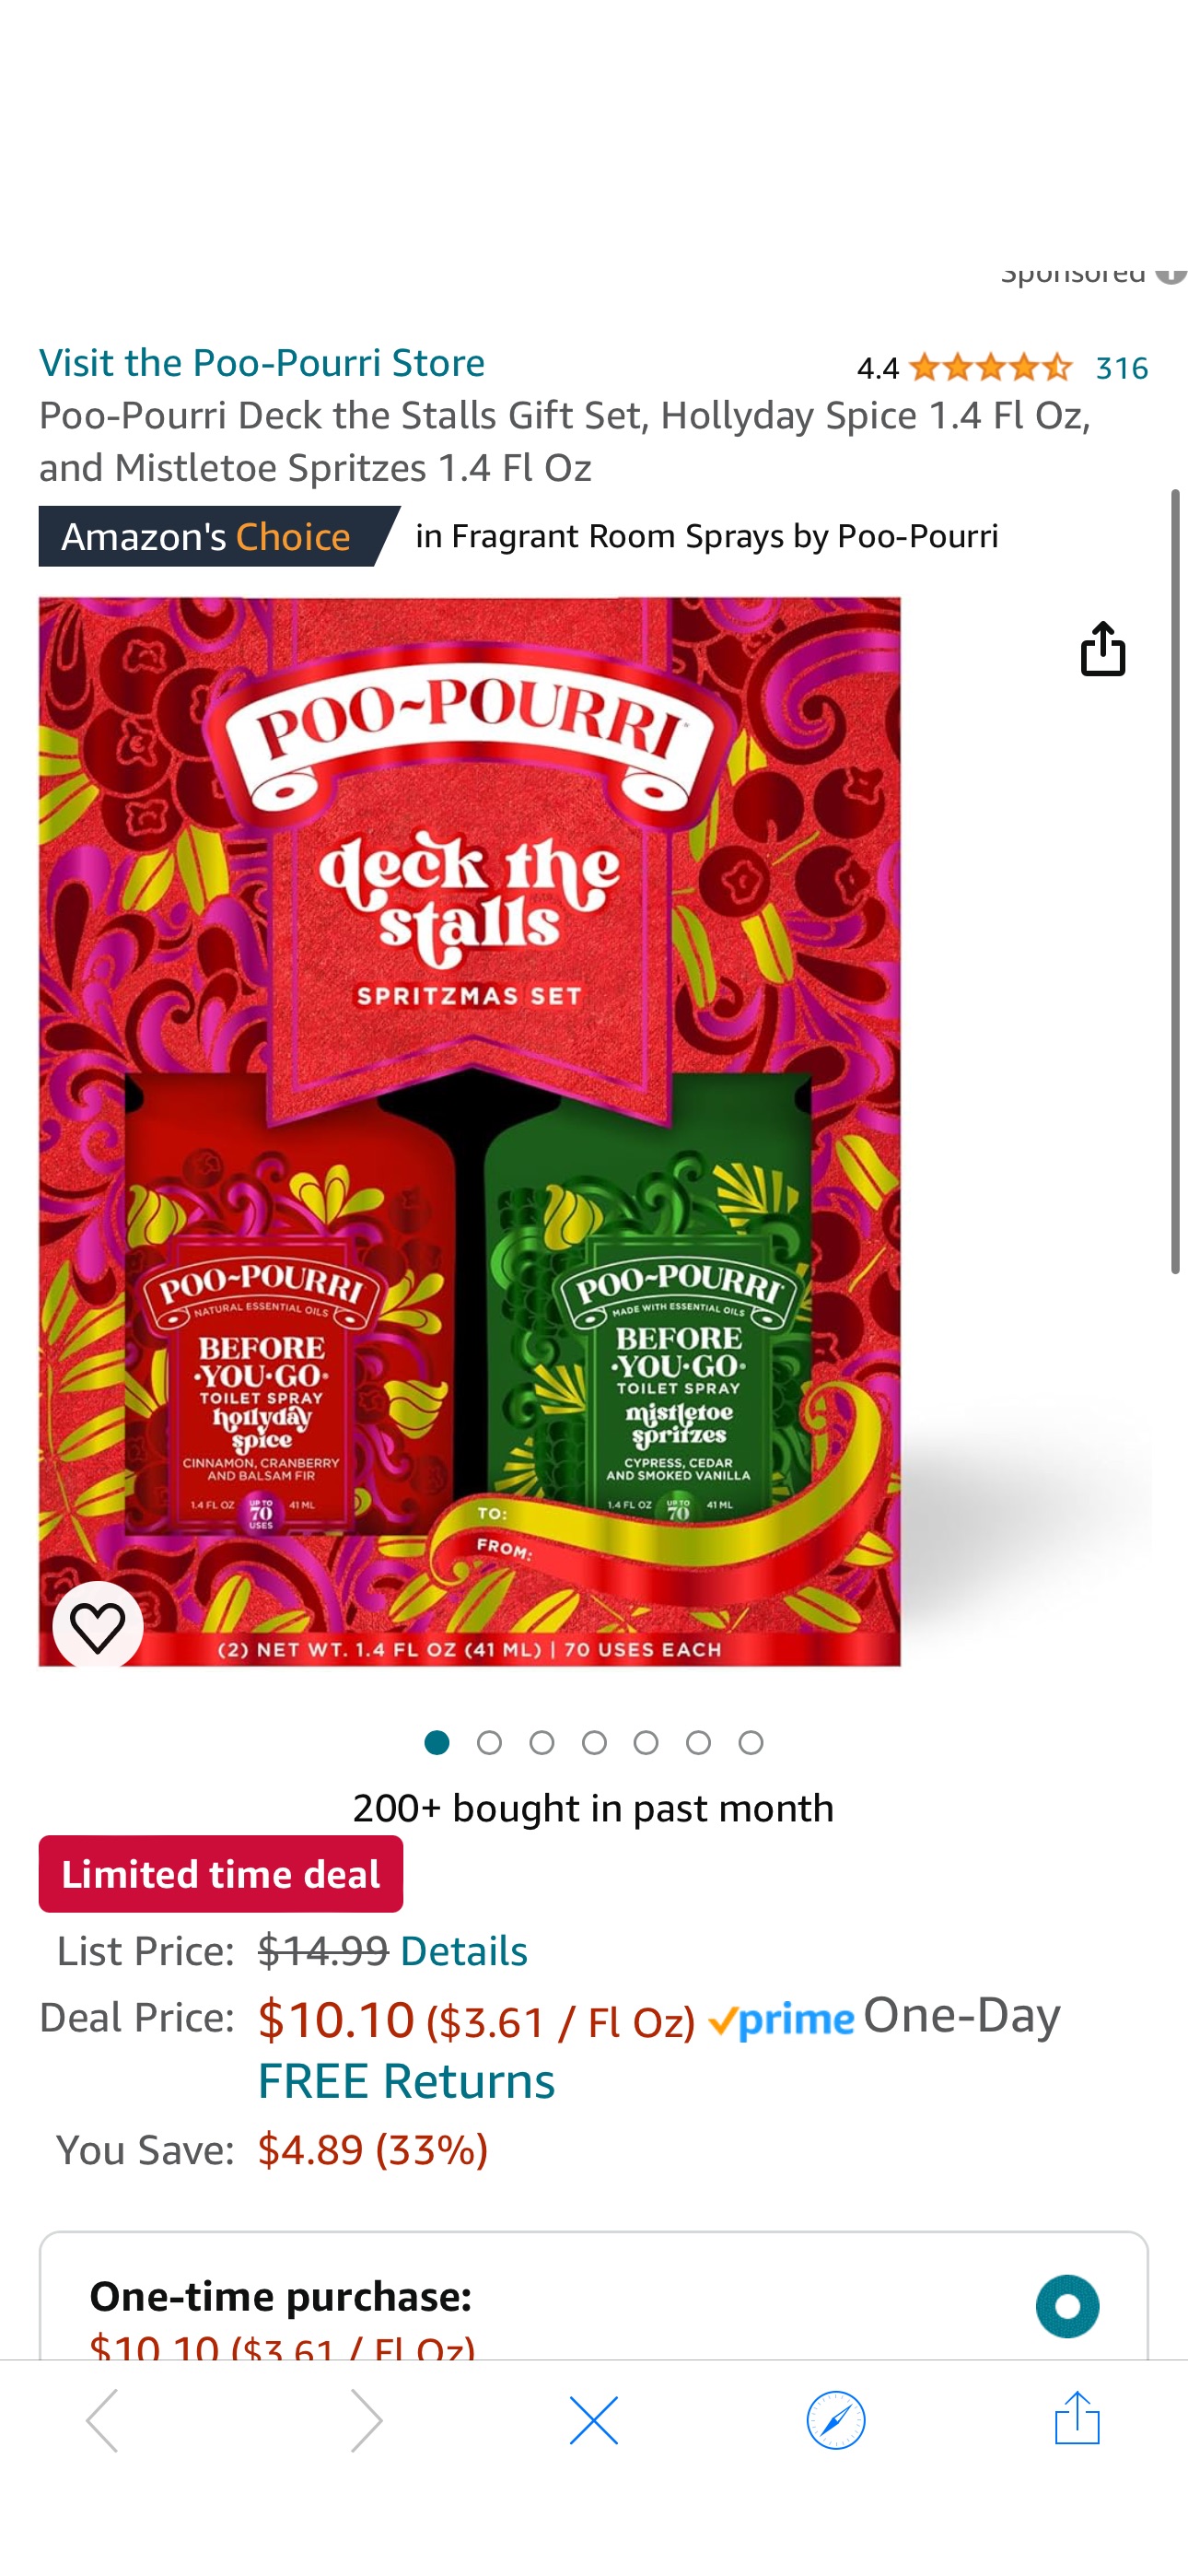 Amazon.com: Poo-Pourri Deck the Stalls Gift Set, Hollyday Spice 1.4 Fl Oz, and Mistletoe Spritzes 1.4 Fl Oz : Home & Kitchen